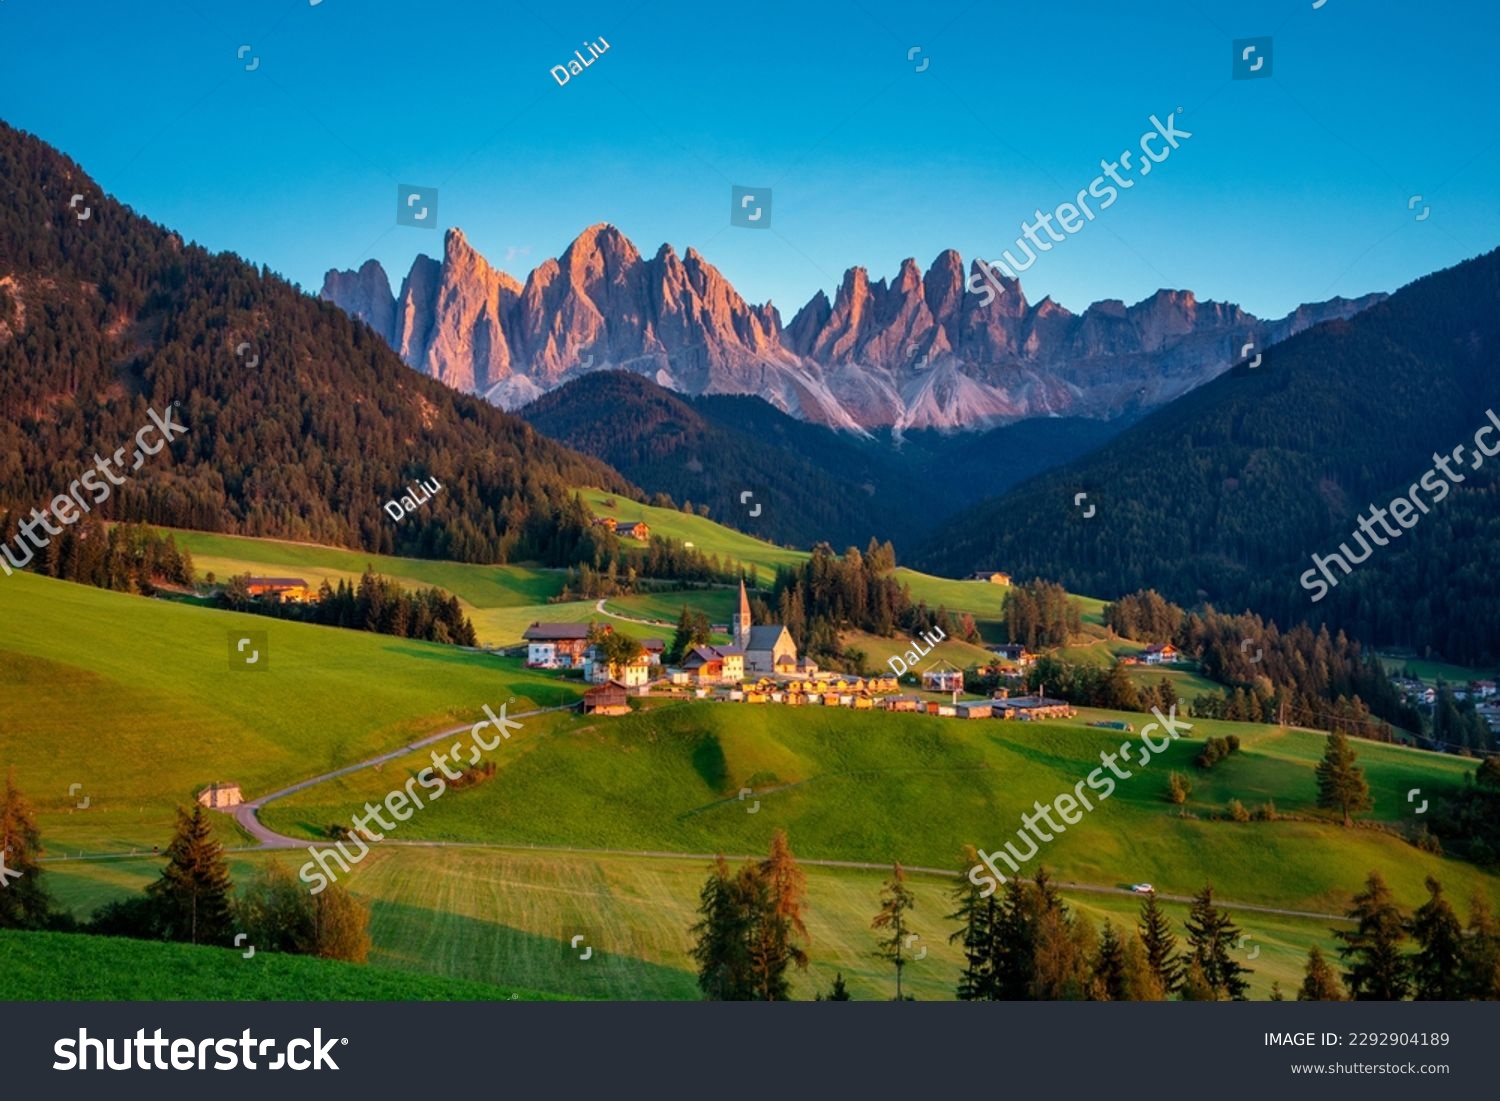 Santa Maddalena (Santa Magdalena) village with magical Dolomites mountains in background, Val di Funes valley, Trentino Alto Adige region, South Tyrol, Italy, Europe. Santa Maddalena Village, Italy.  #2292904189